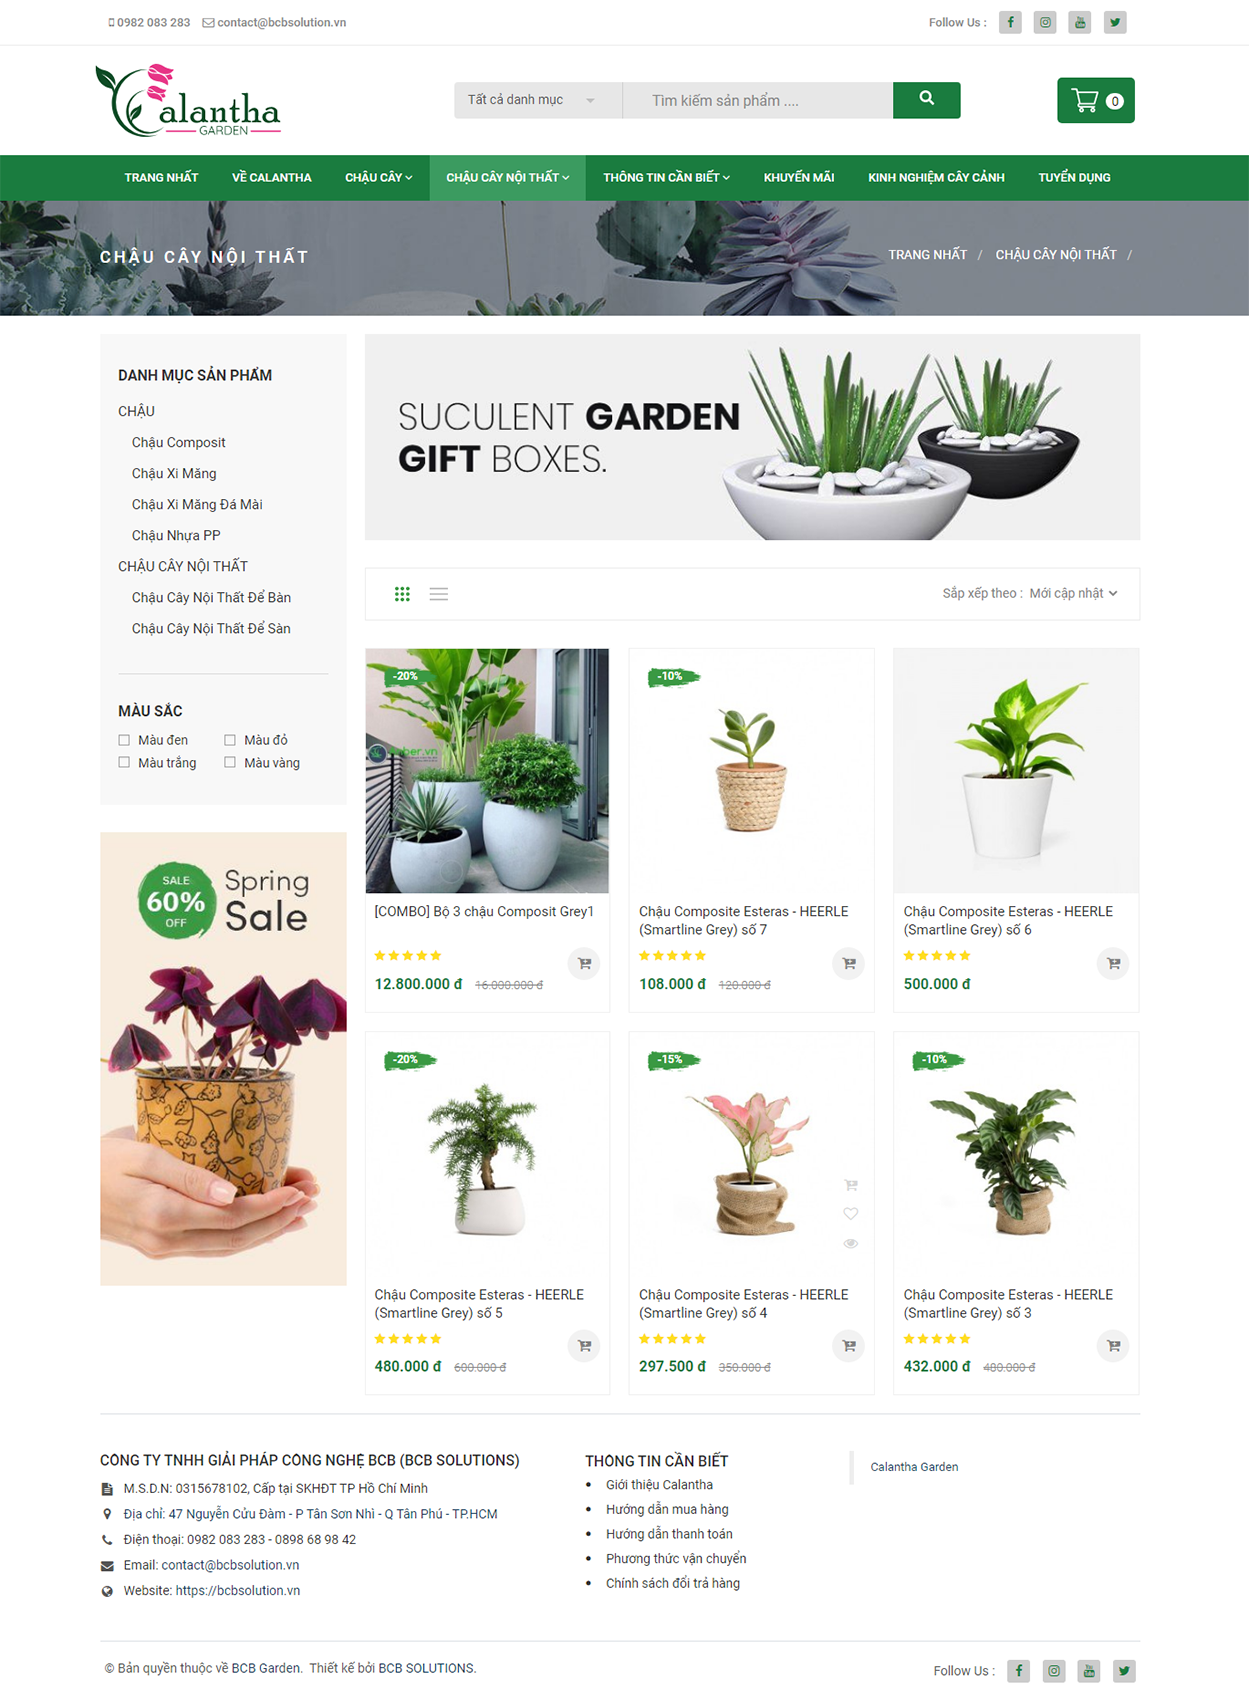 Giao diện website bán hàng - BCB Garden 2